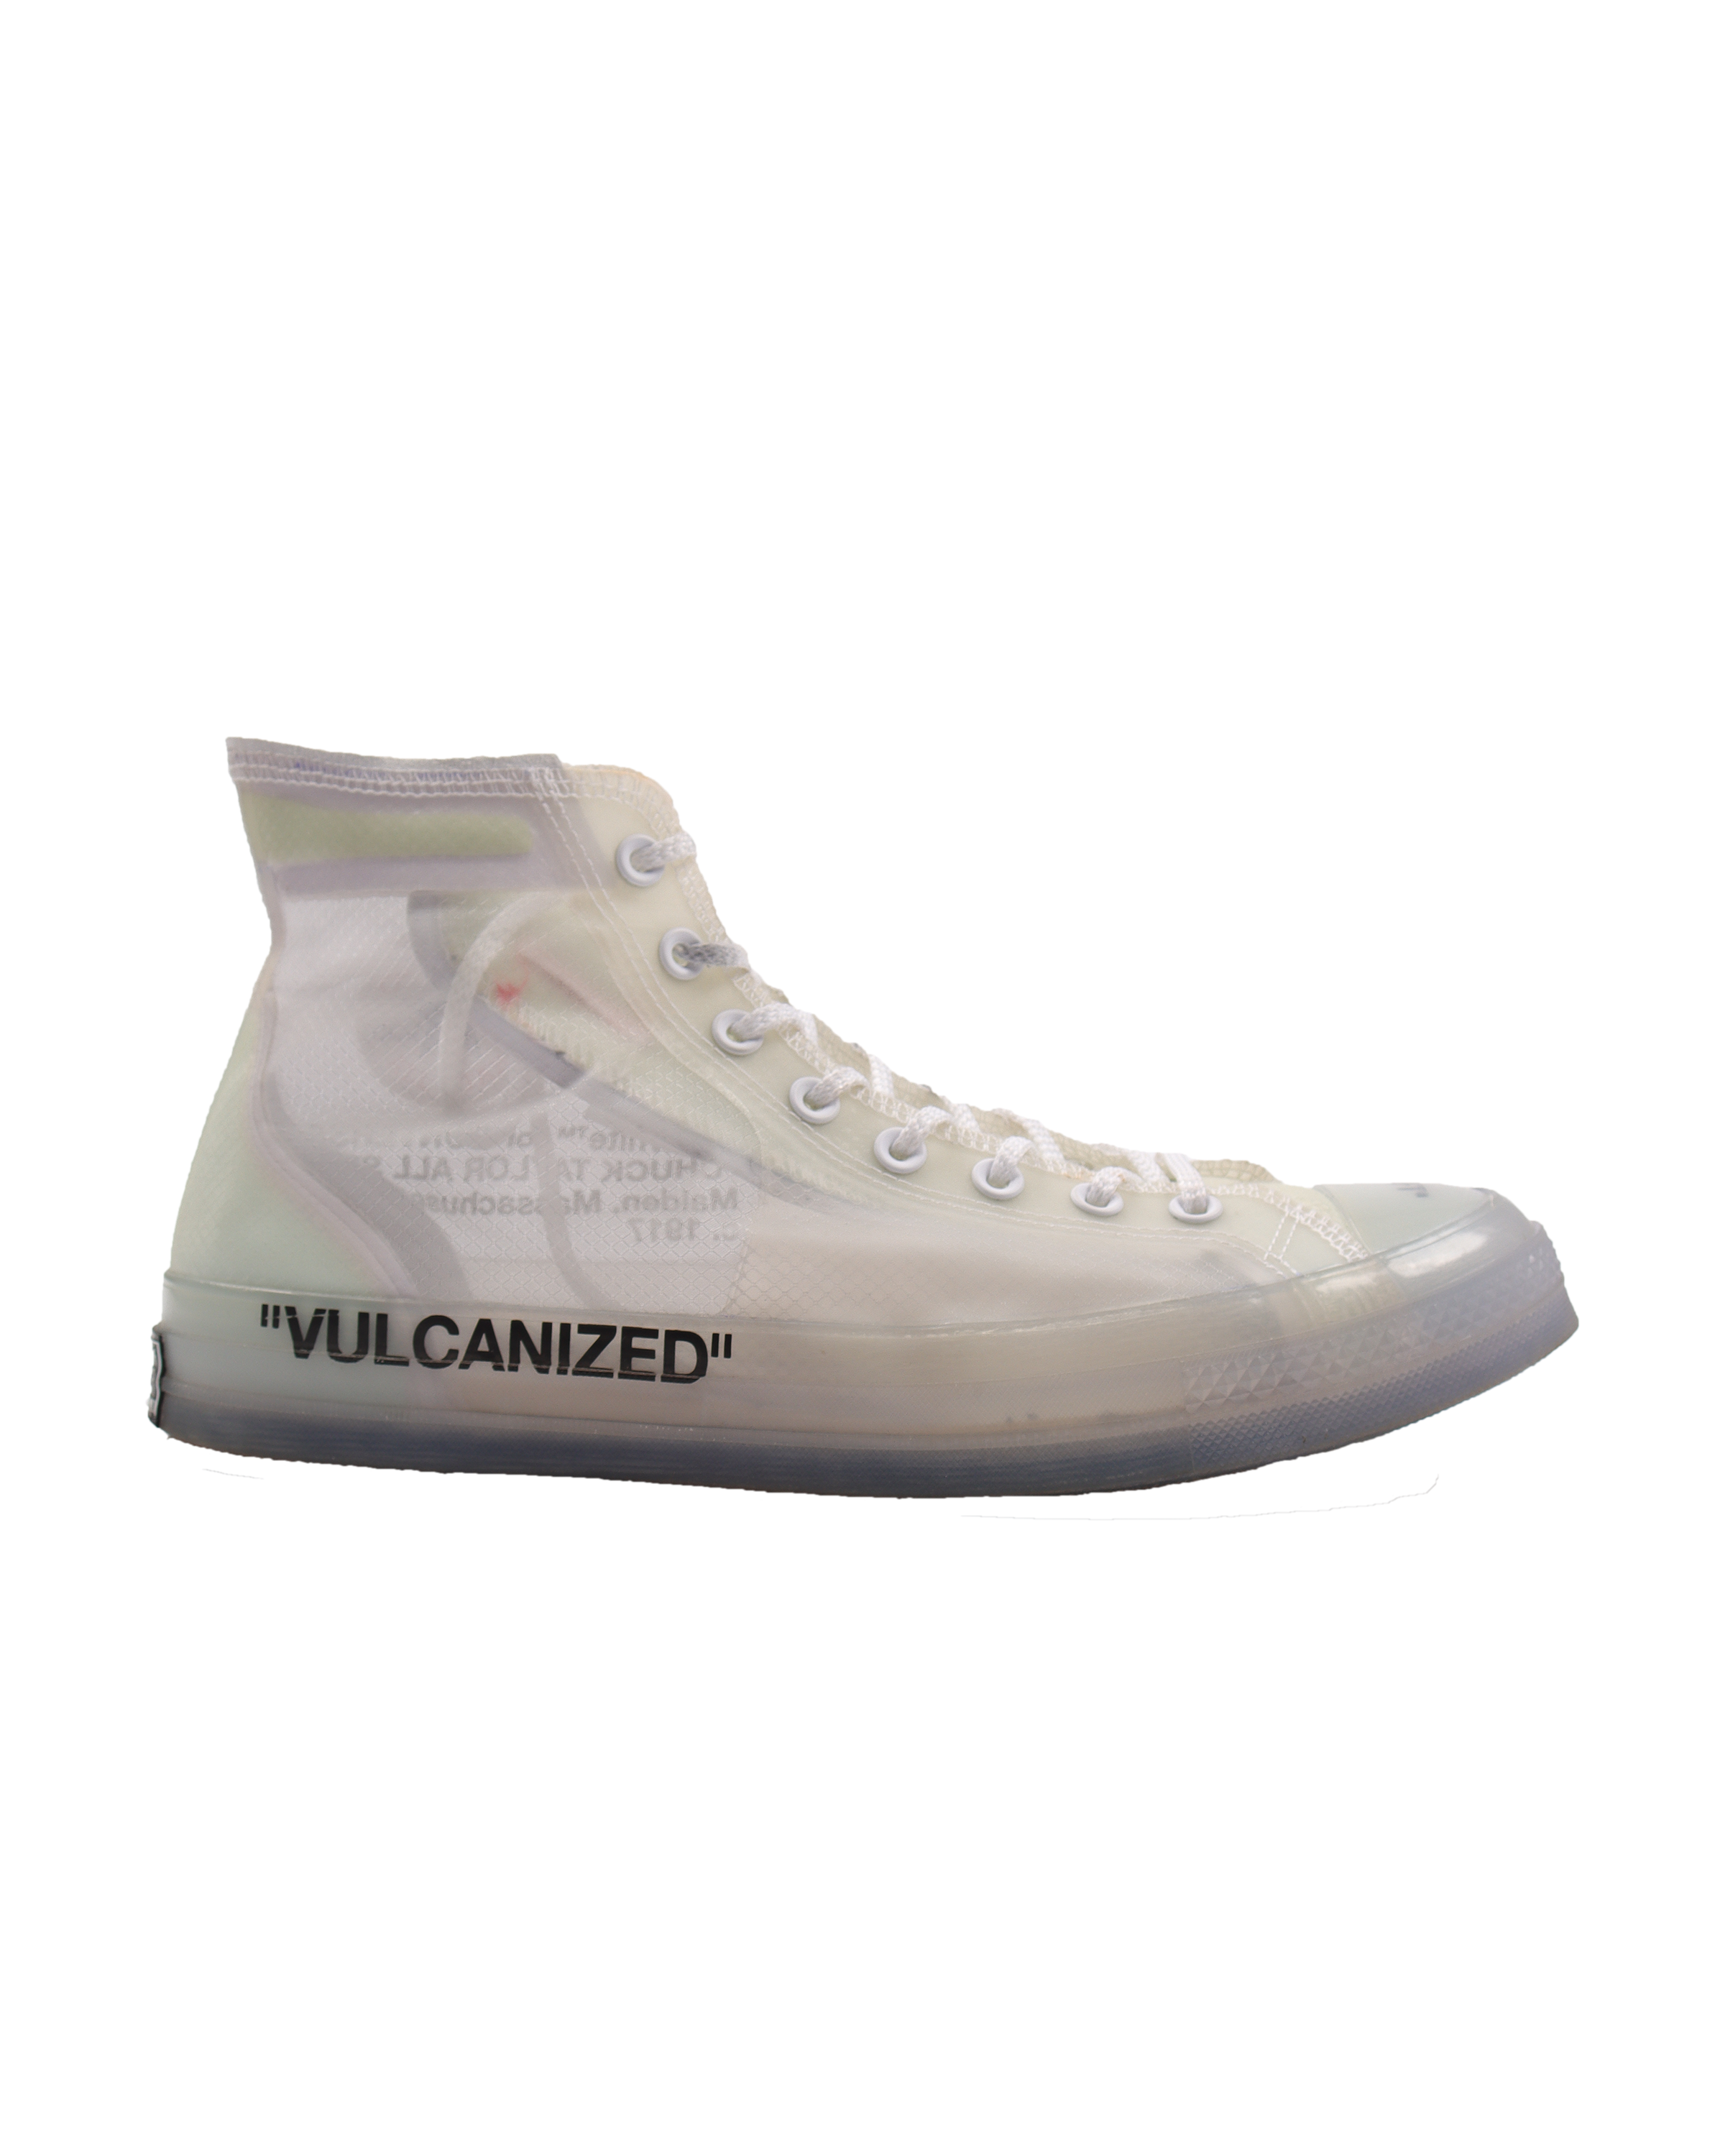 Converse Chuck Taylor All-Star "Vulcanized"